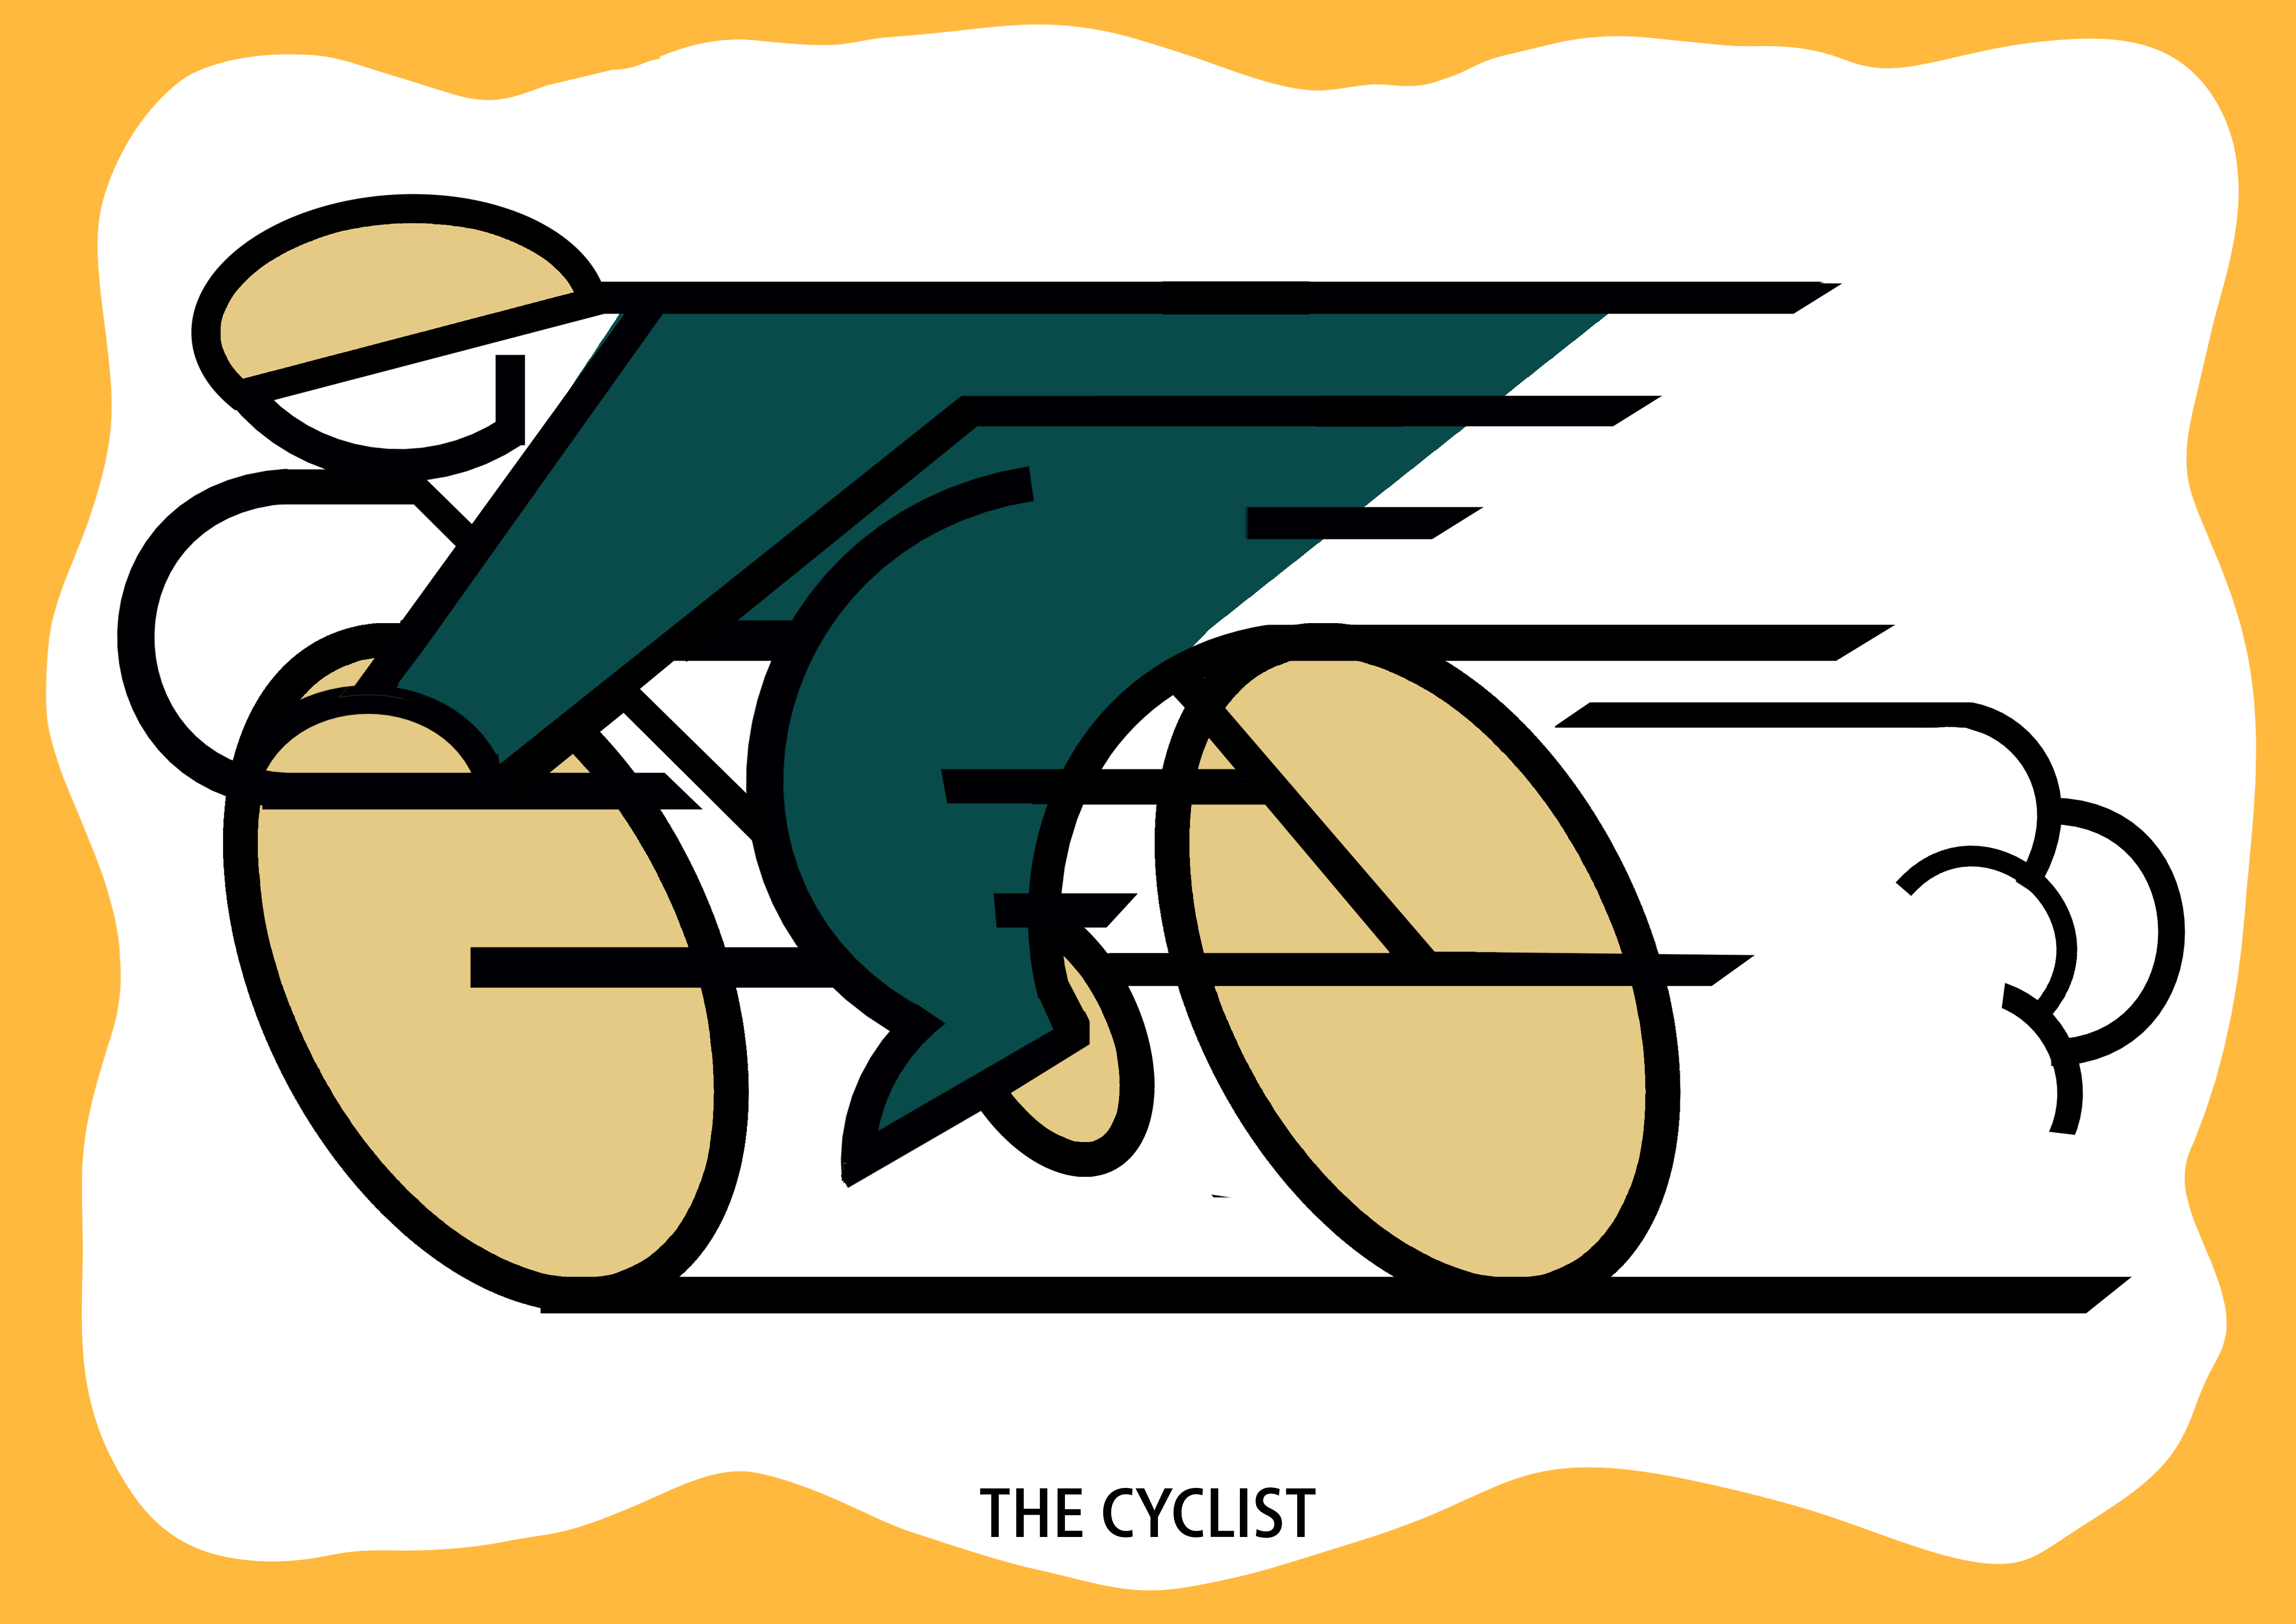 THE CYCLIST